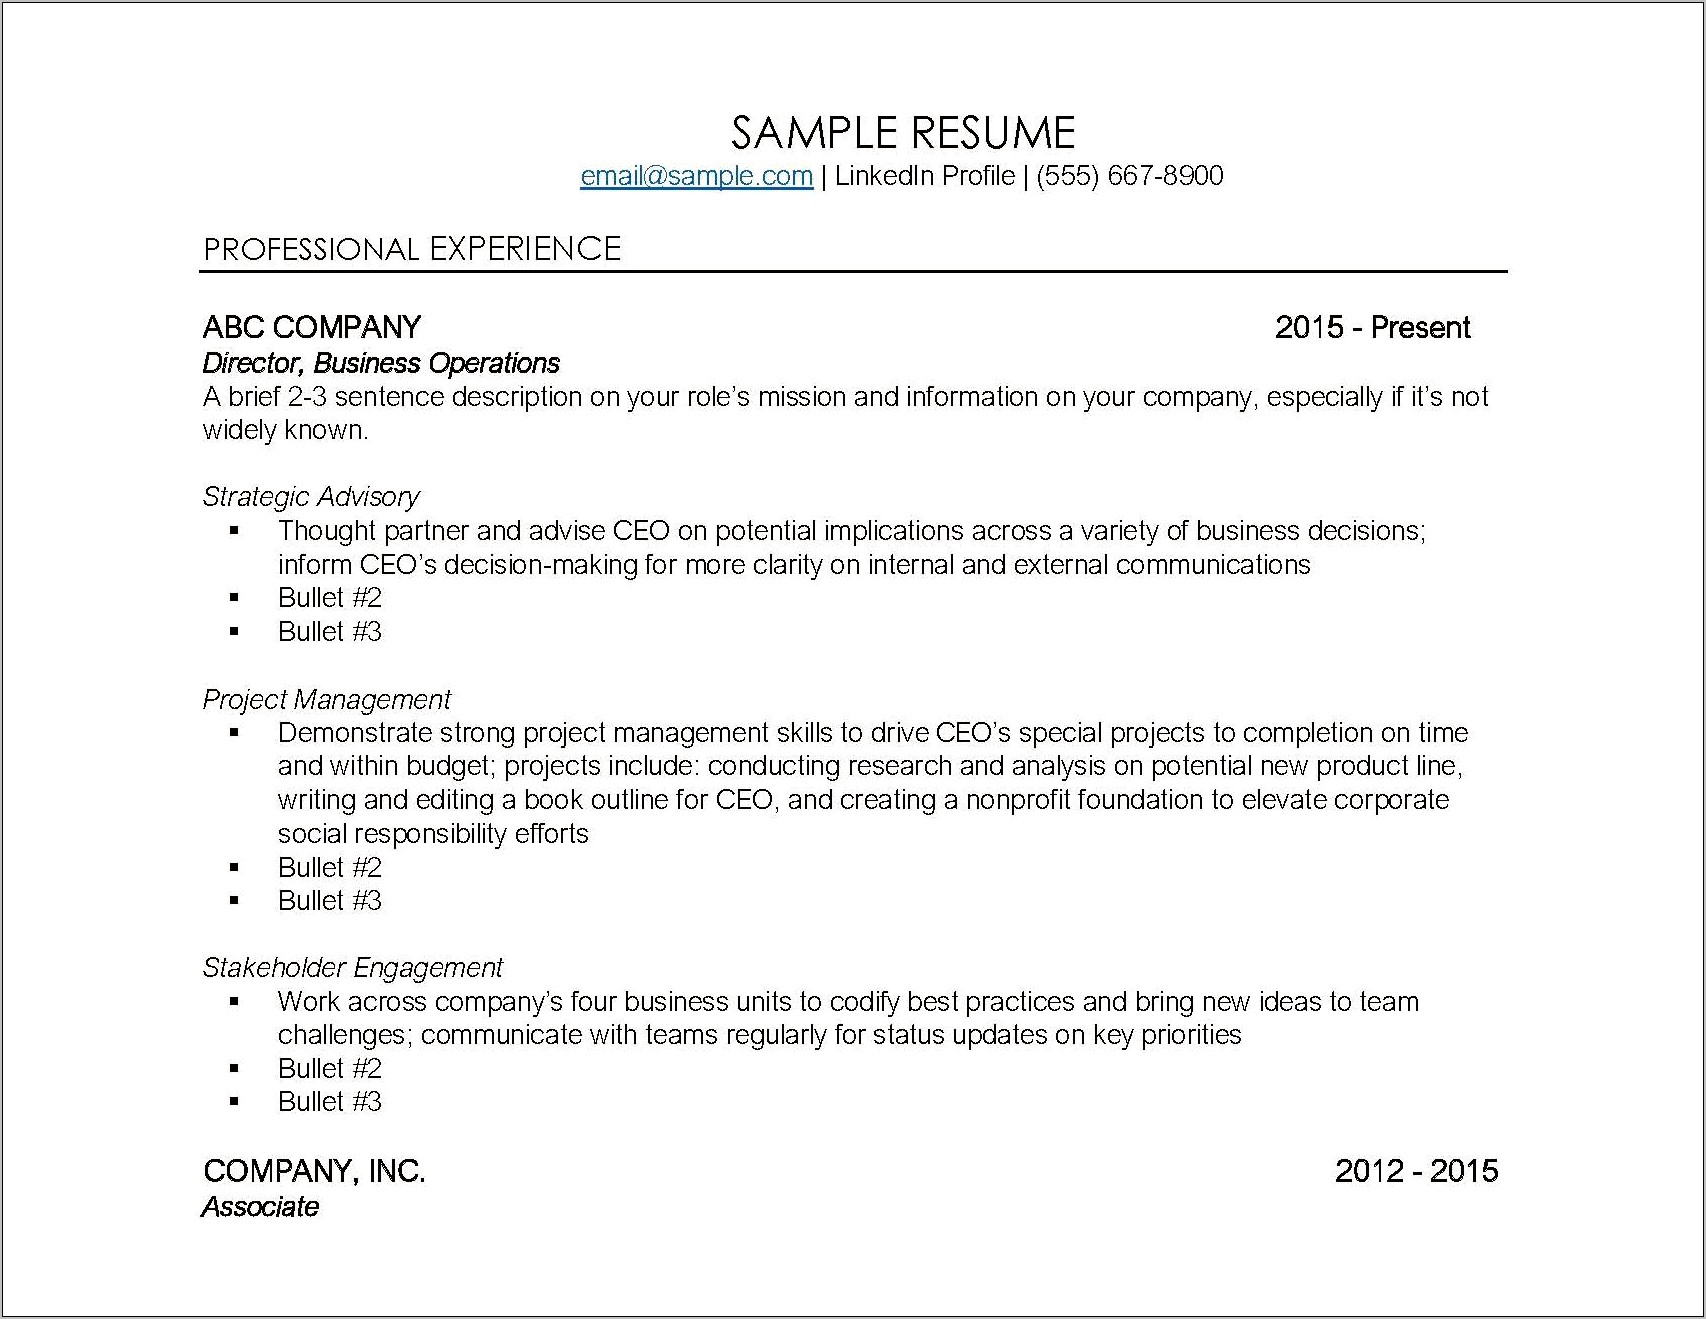 Bullets Under Job Listing Of Resume